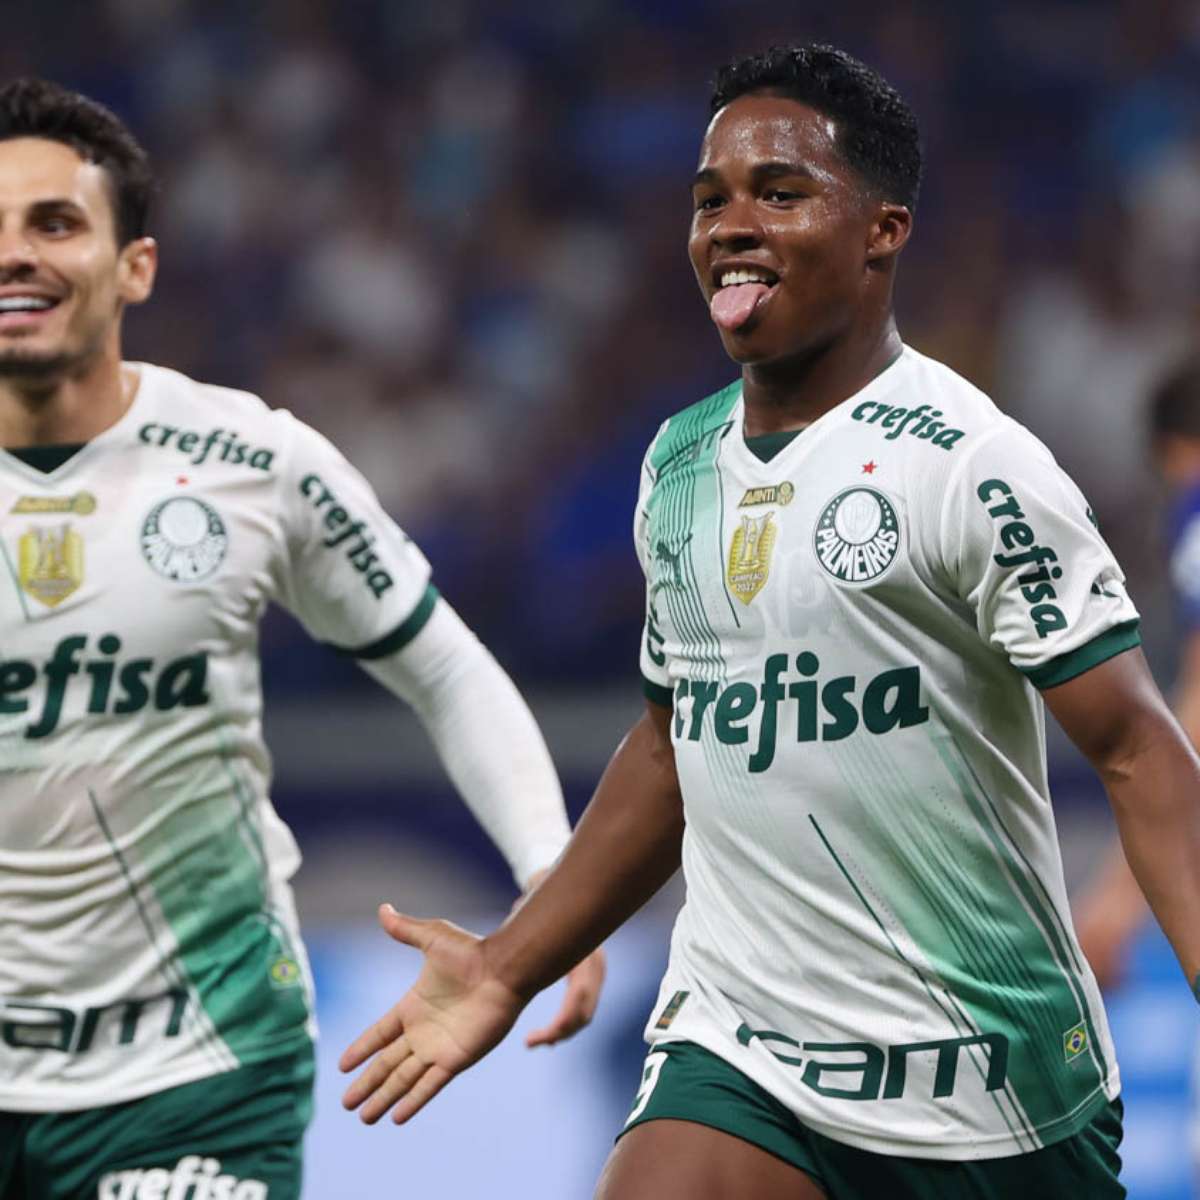 Clube Palmeiras - Belo Horizonte/MG